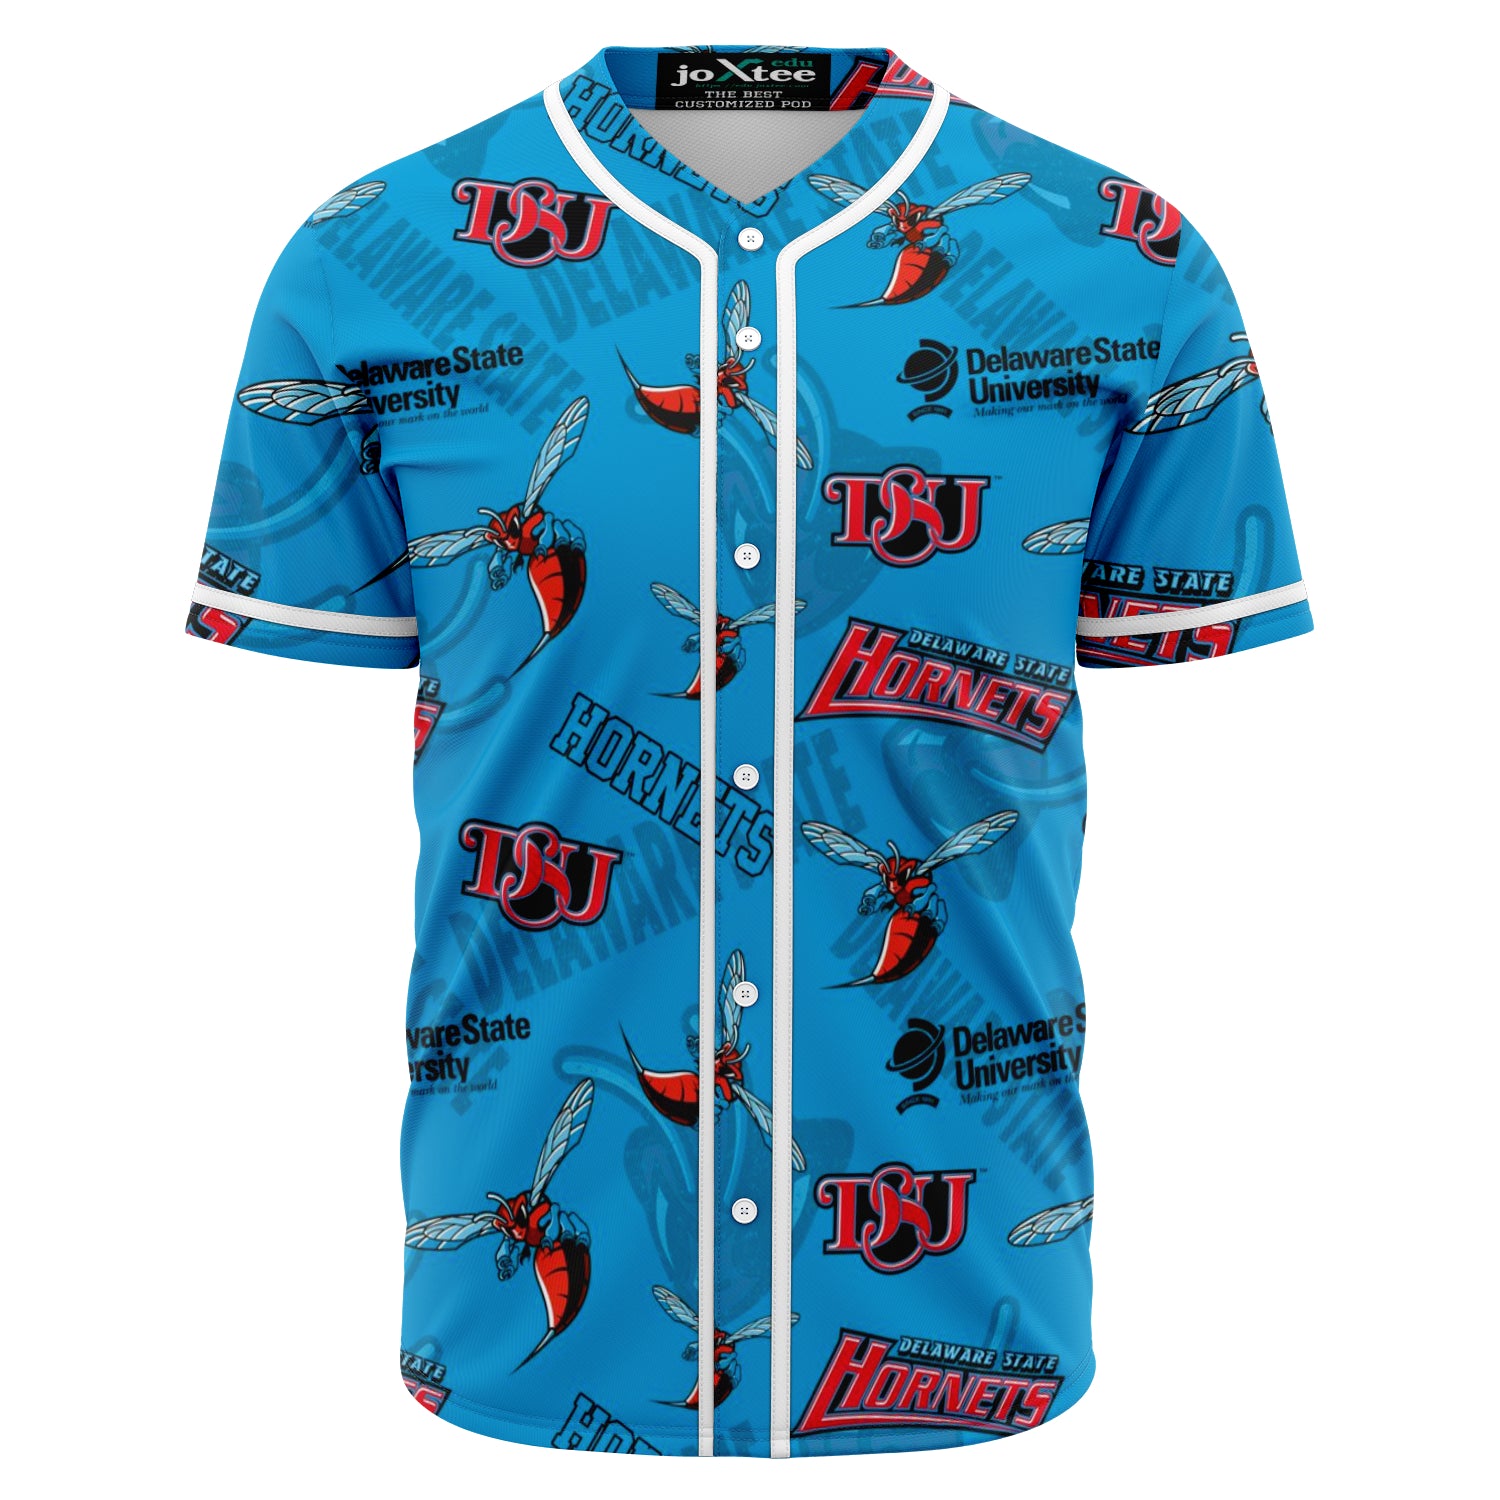 Dsu Hornets Baseball jersey v603